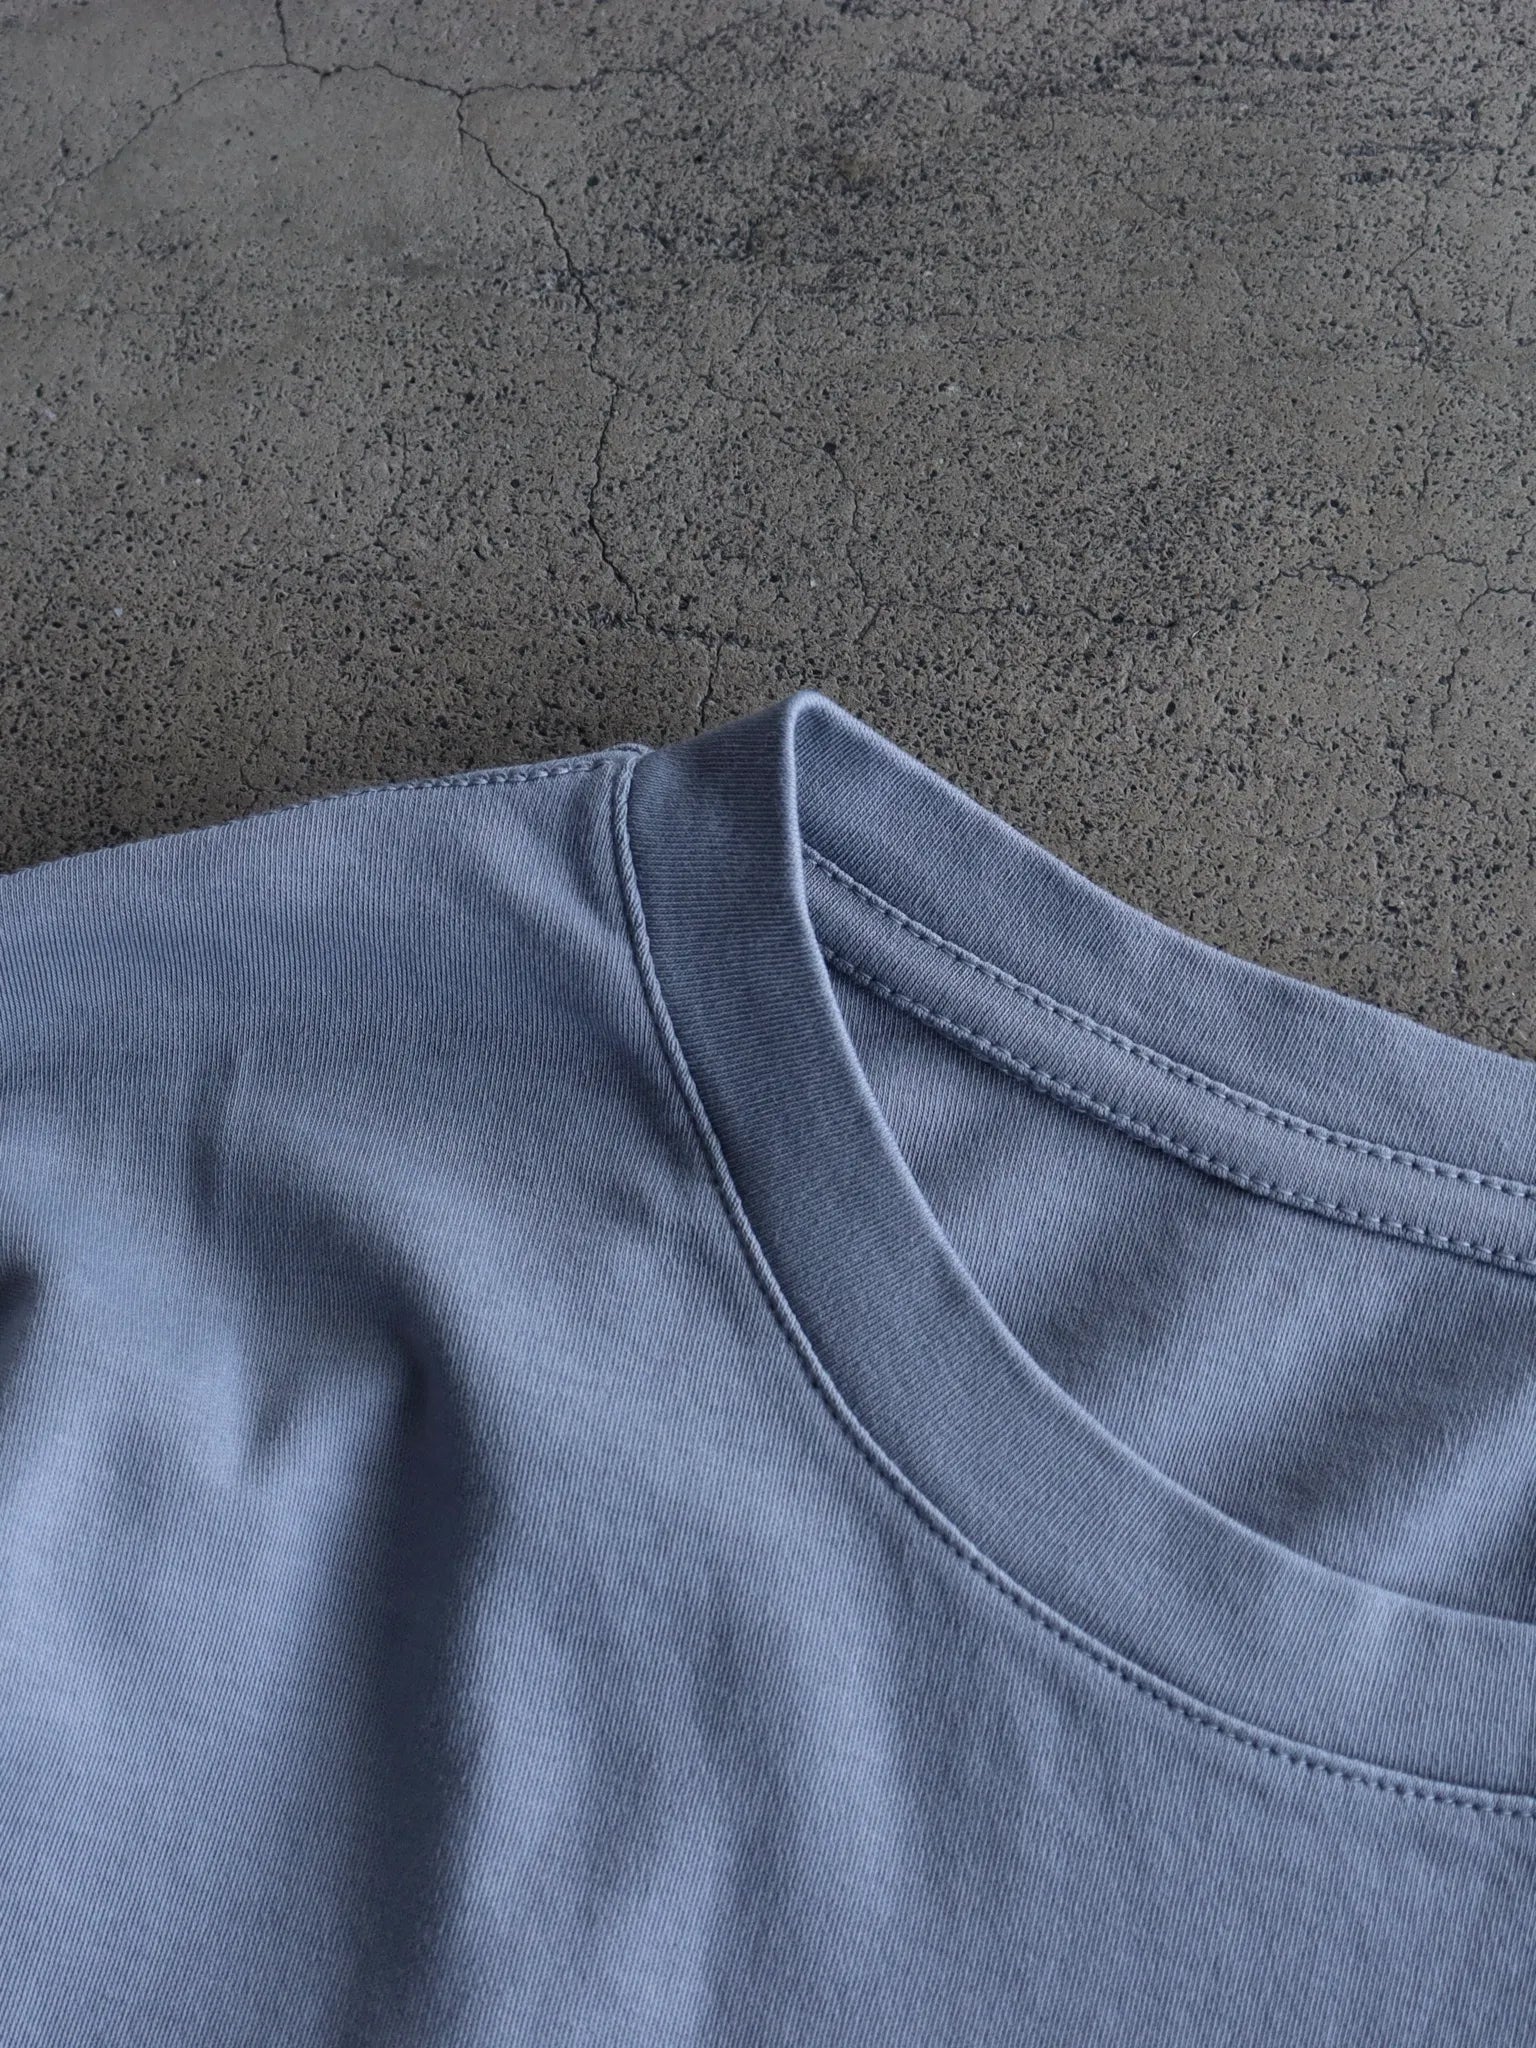 the-inoue-brothers-garment-dye-pocket-l-s-t-shirt-ash-blue-4